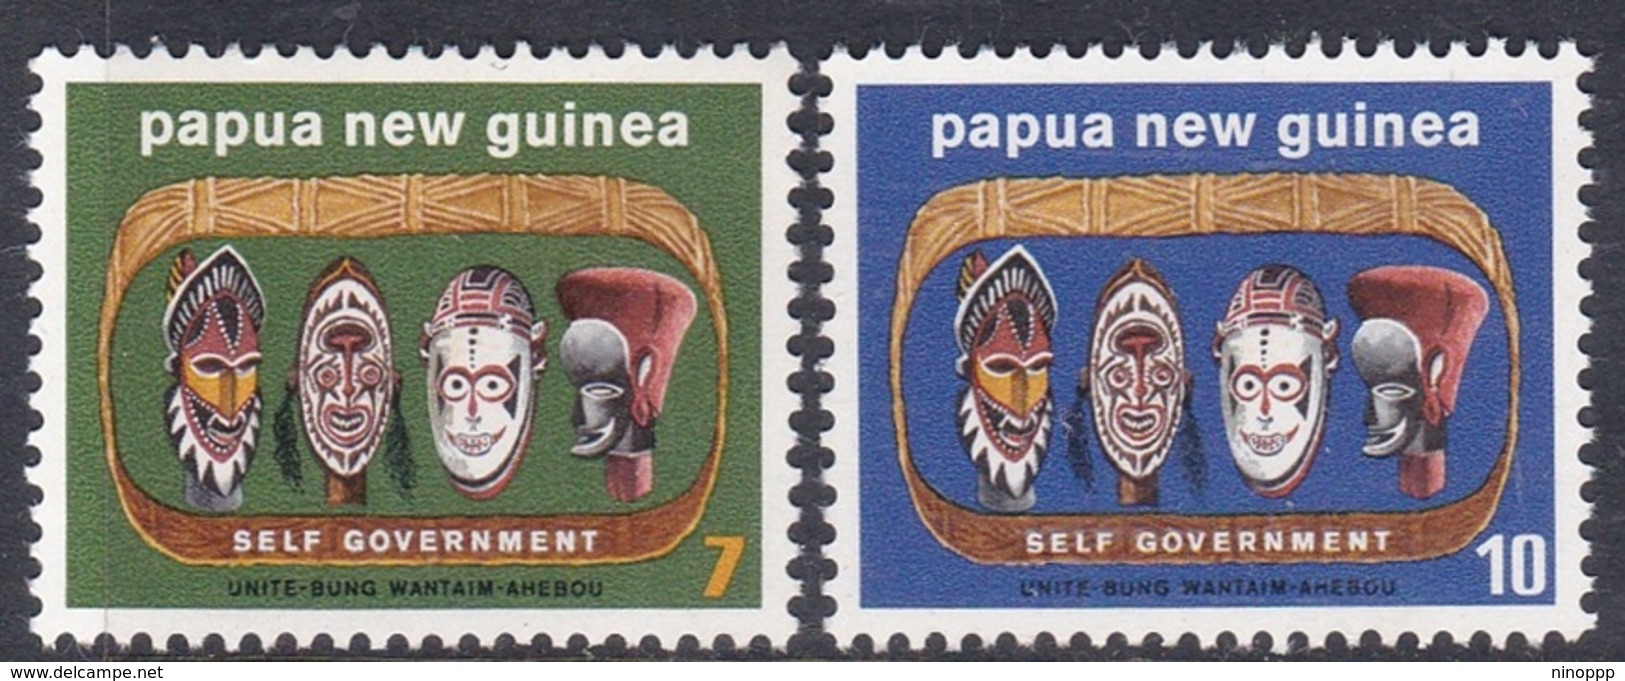 Papua New Guinea SG 266-267 1973 Self Government MNH - Papua New Guinea